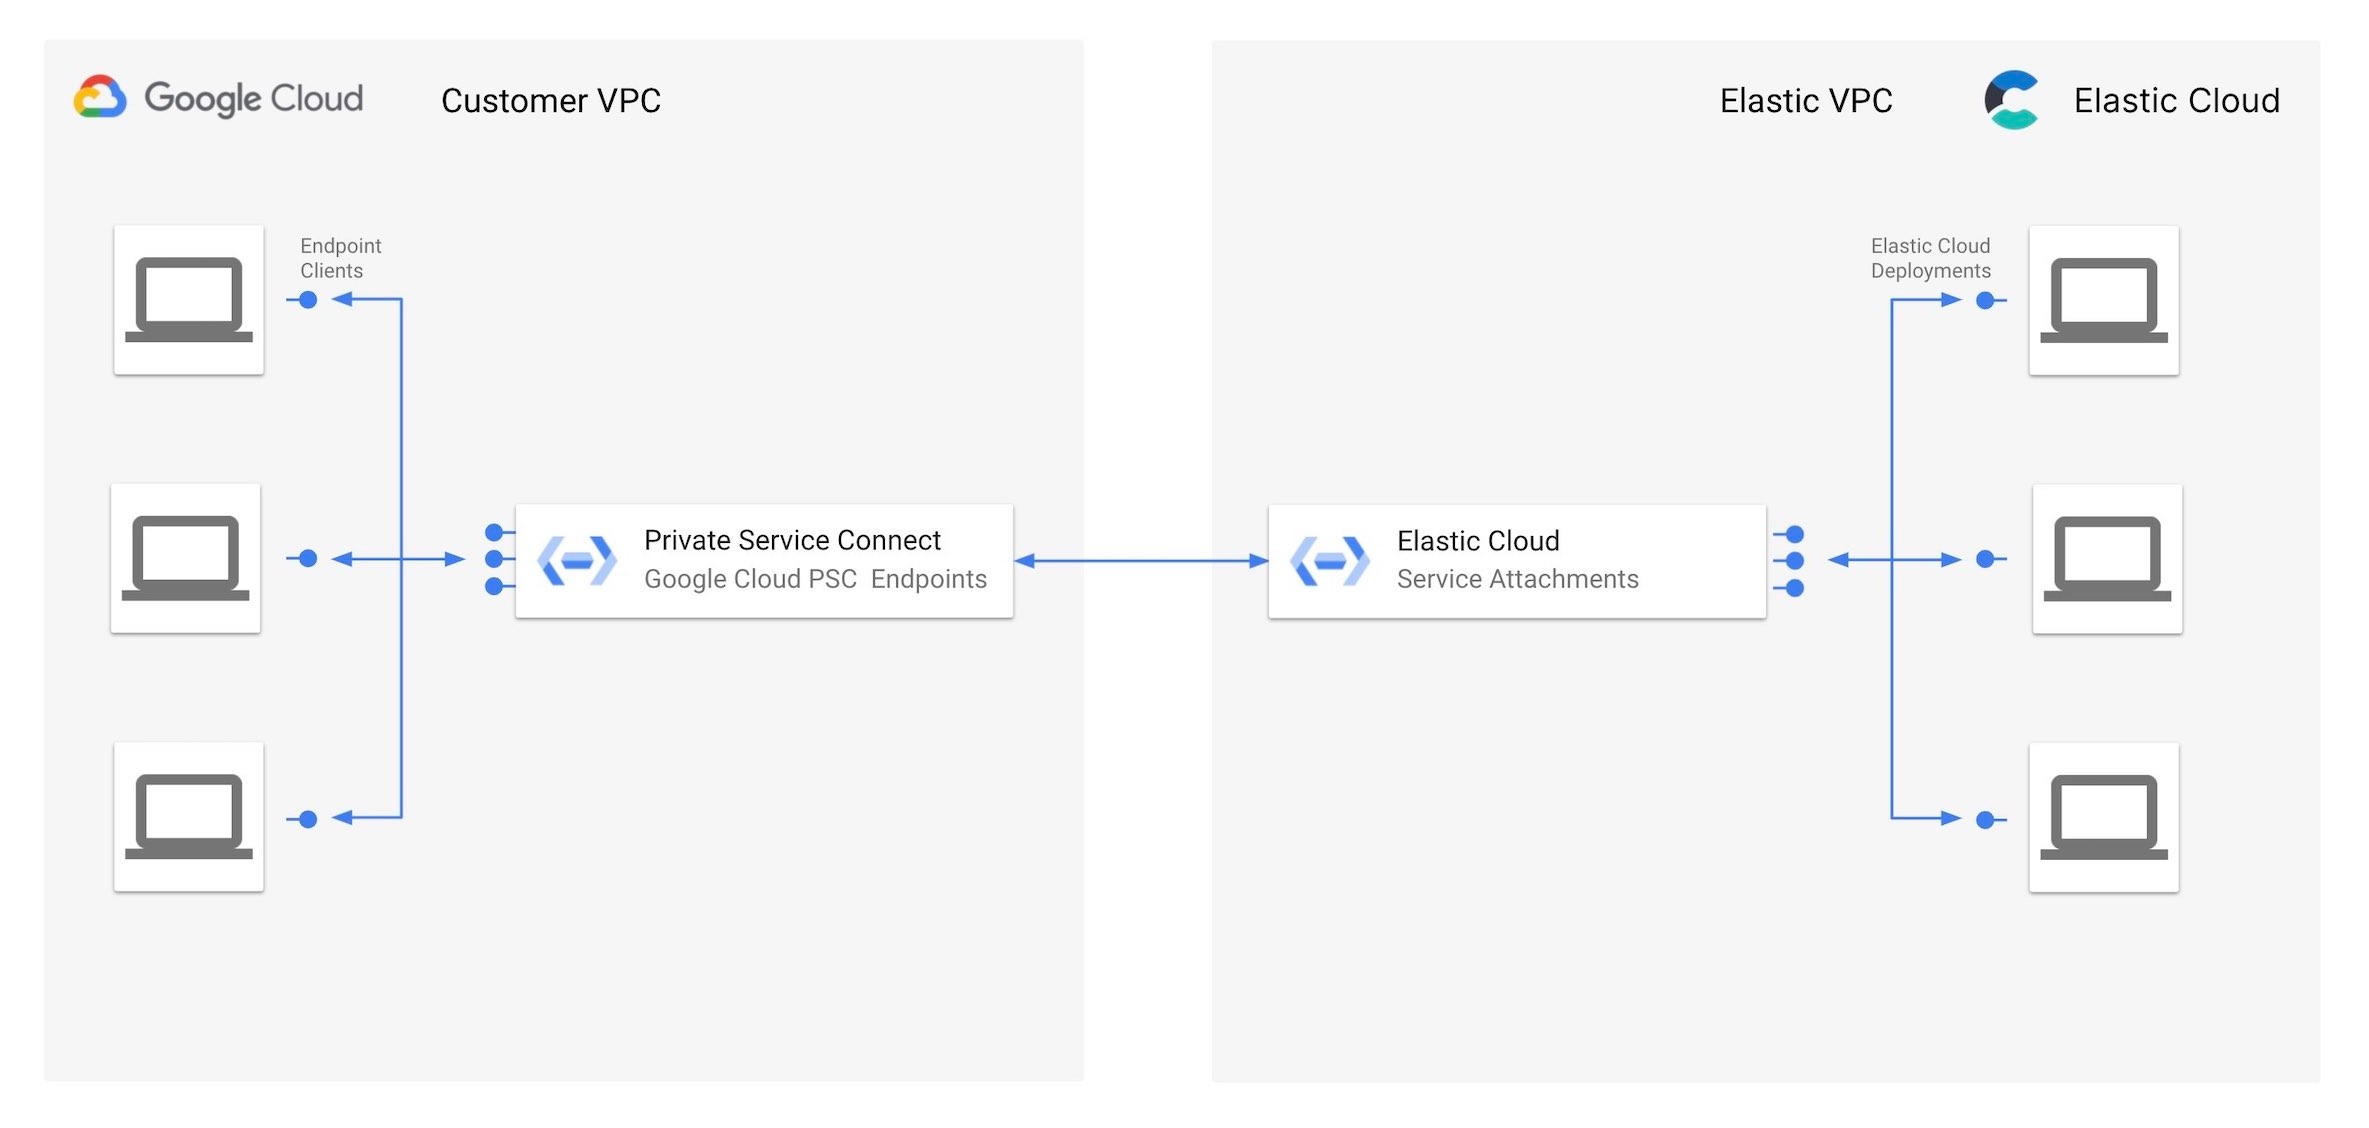 Google Private Service Connect 既能对 Elastic Cloud 终端部署提供轻松的专属访问，又能将所有流量保持在 Google 网络内